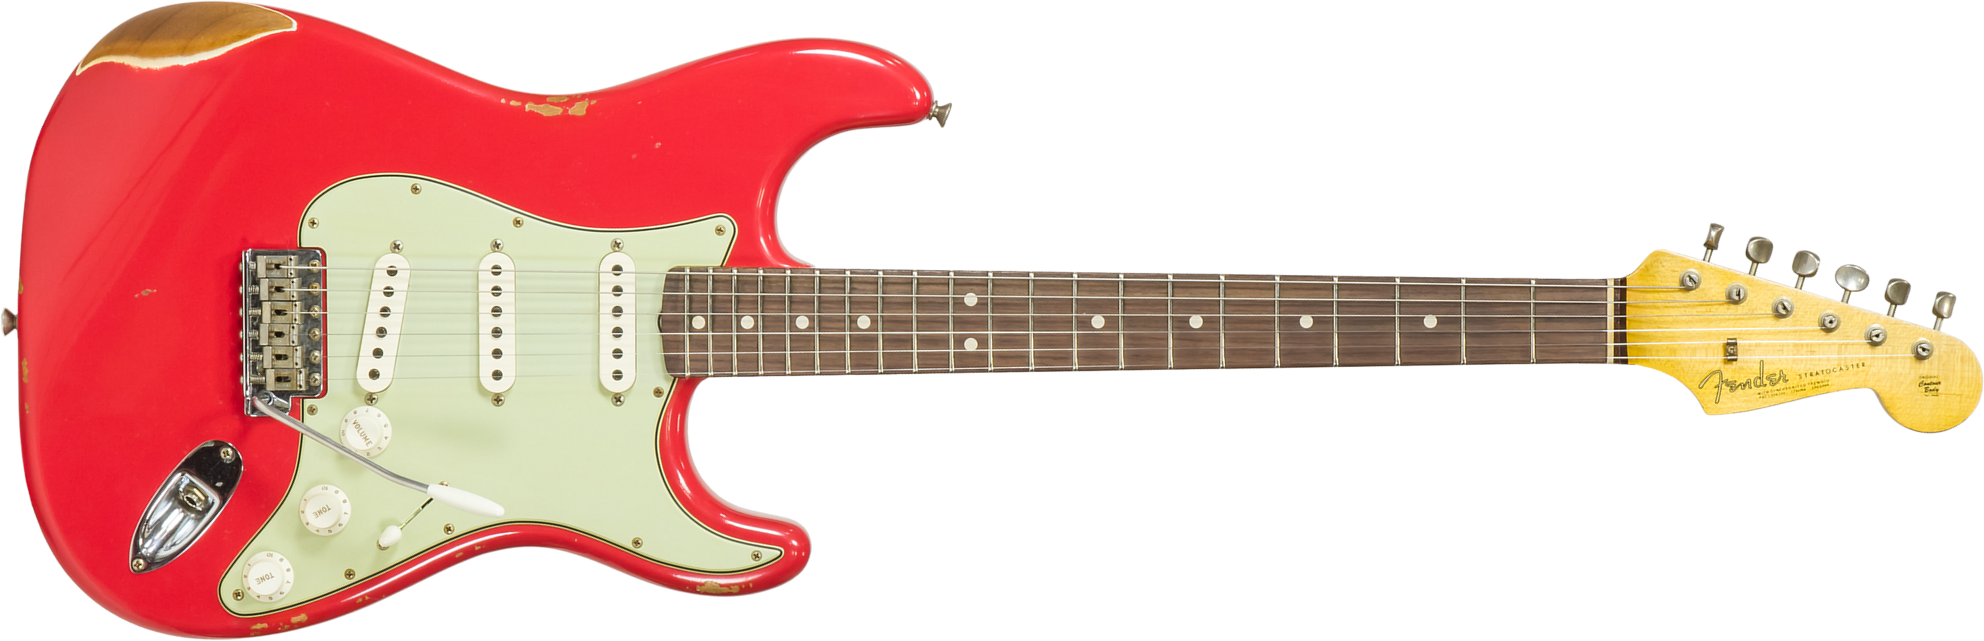 Fender Custom Shop Strat 1963 3s Trem Rw #r117571 - Relic Fiesta Red - Str shape electric guitar - Main picture